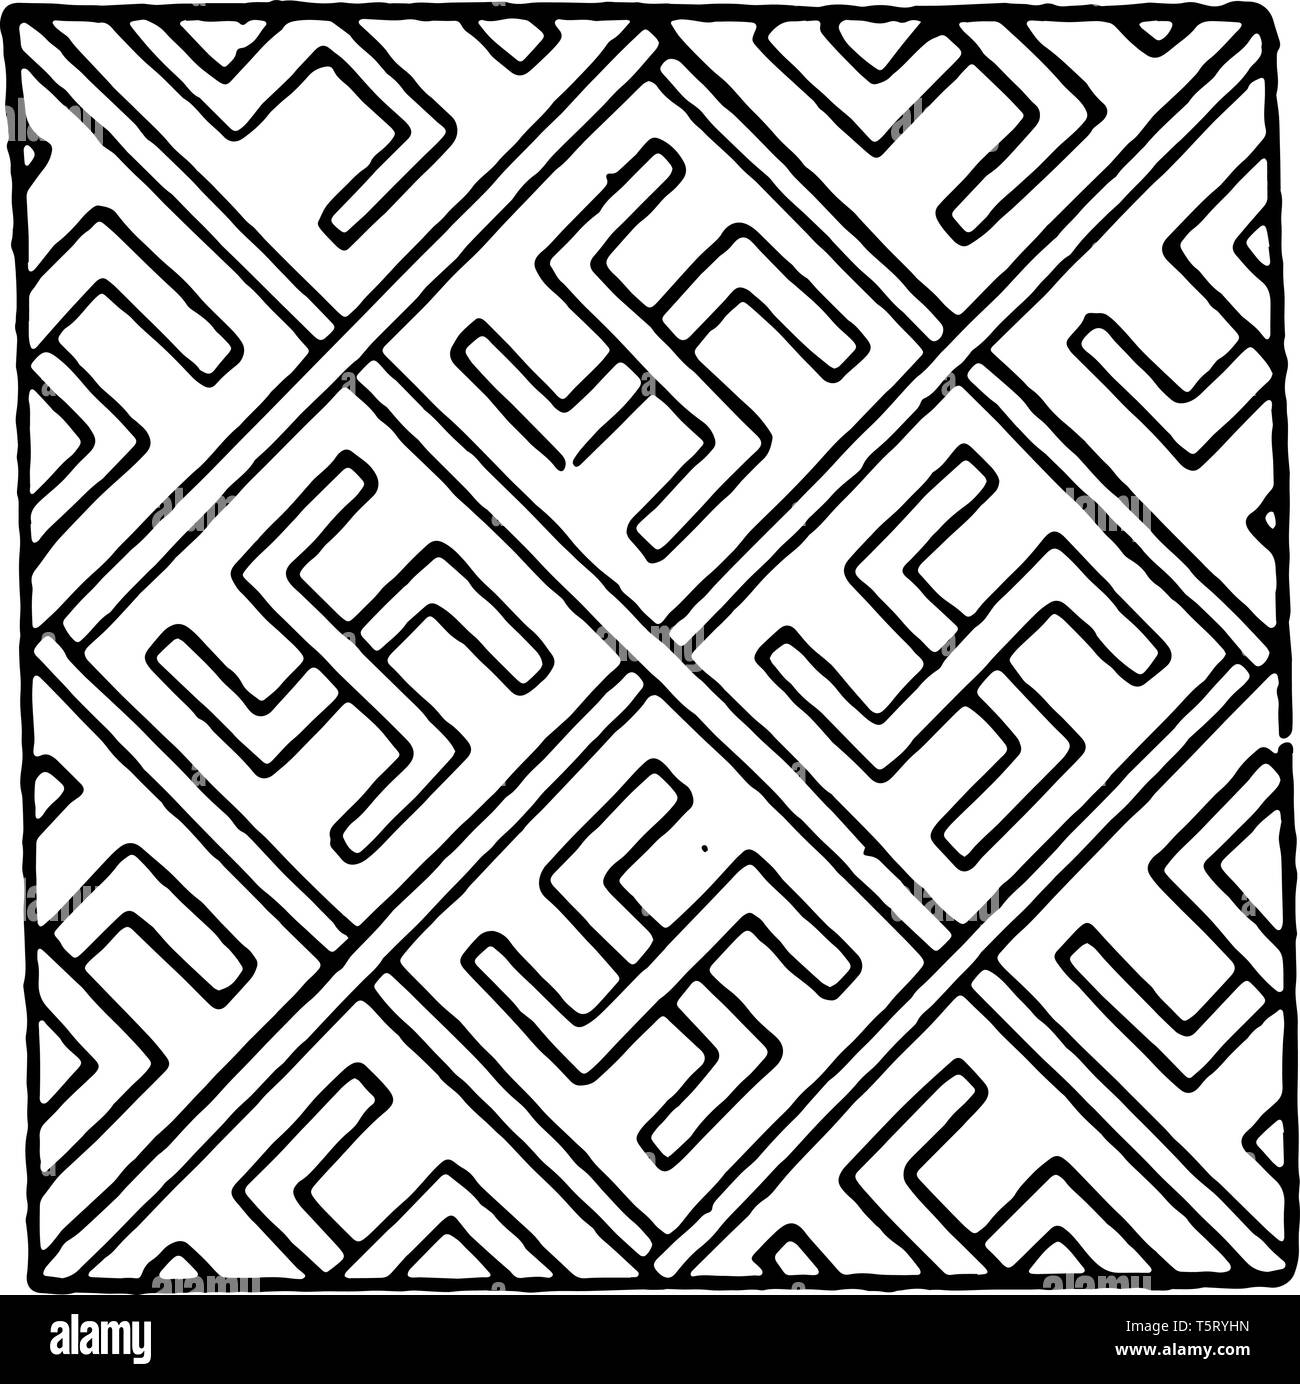 simple engraving patterns